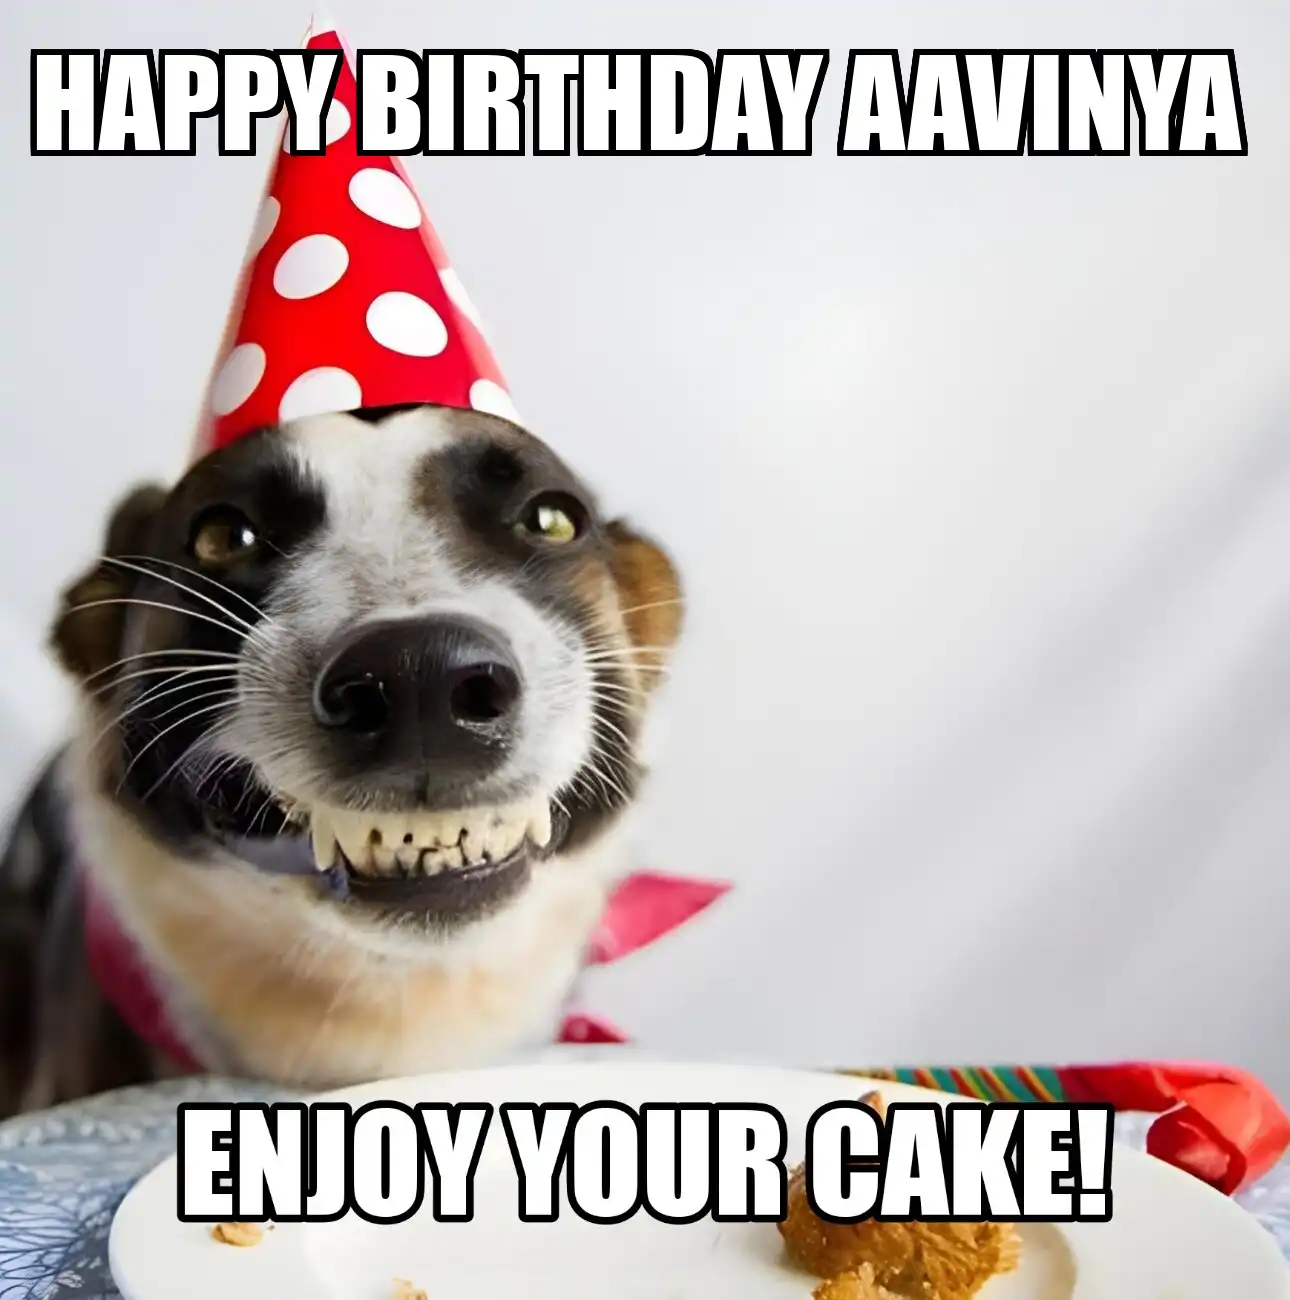 Happy Birthday Aavinya Enjoy Your Cake Dog Meme